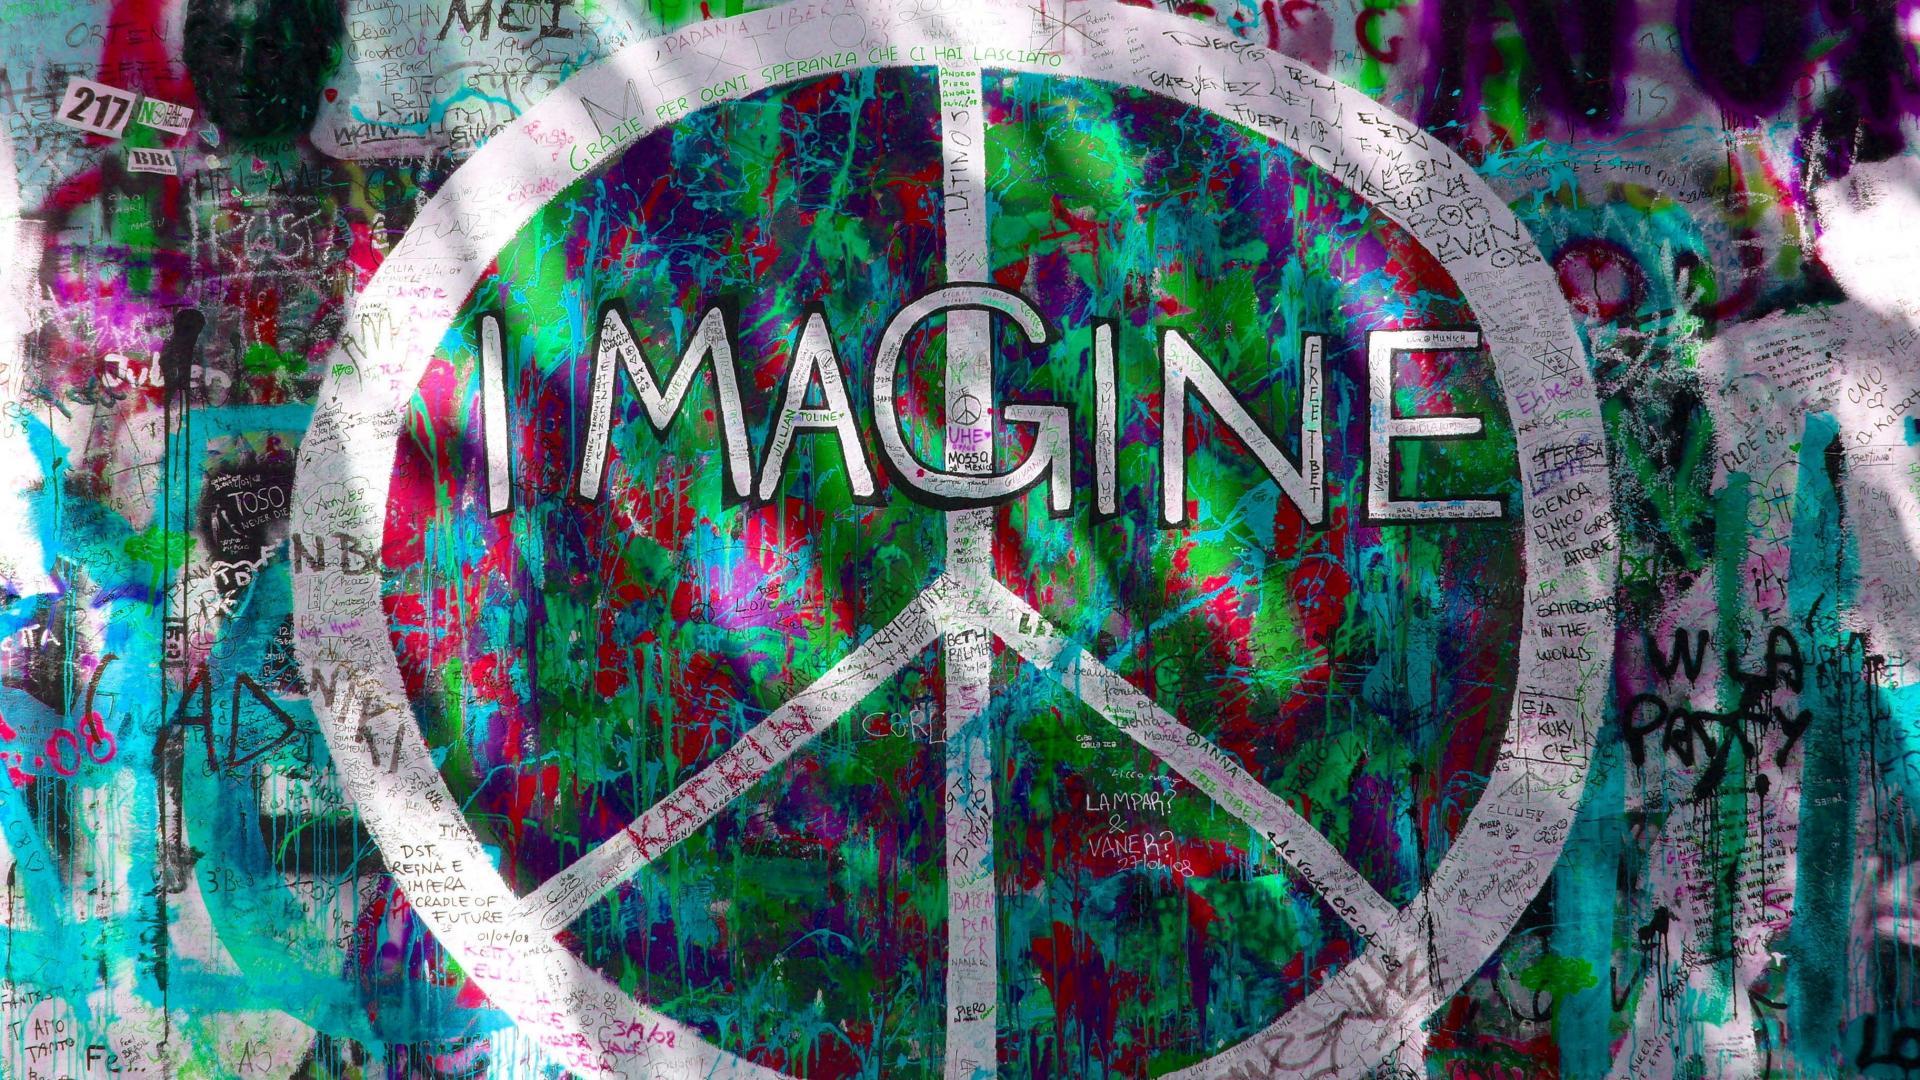 imagine peace wallpaper